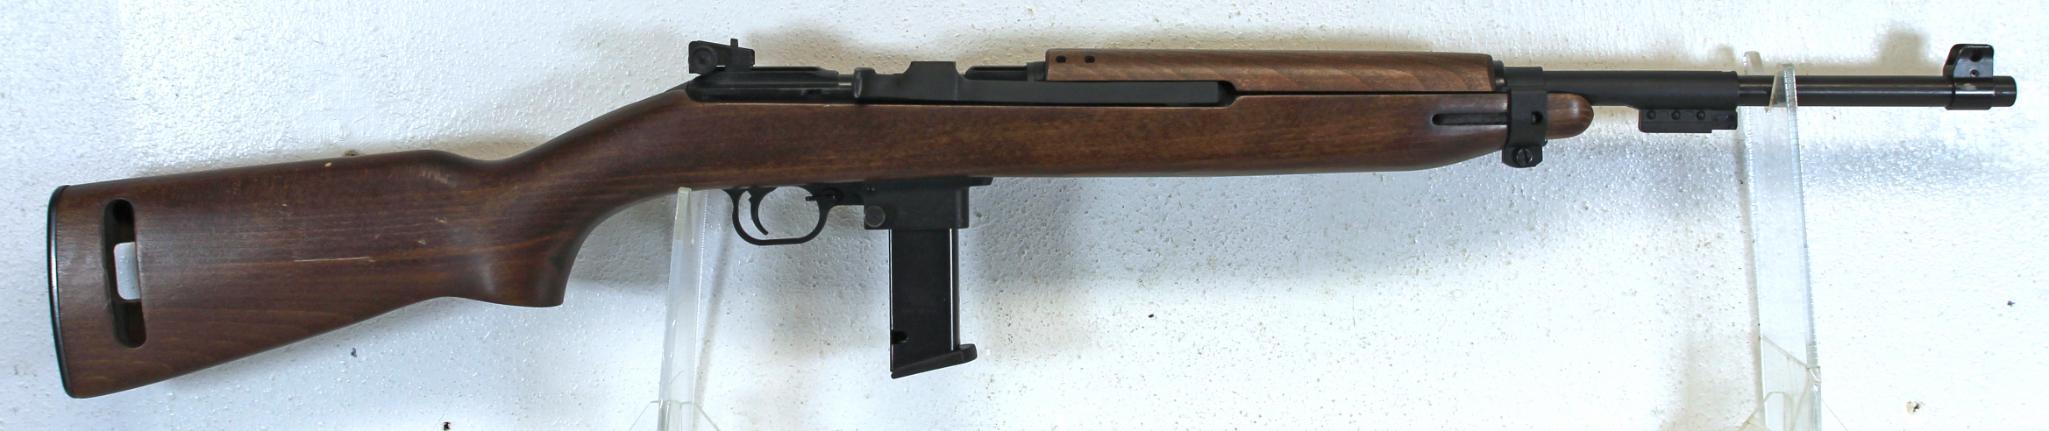 Citadel Model M1-9 9 mm Semi-Auto Carbine Rifle SN#14N24149...